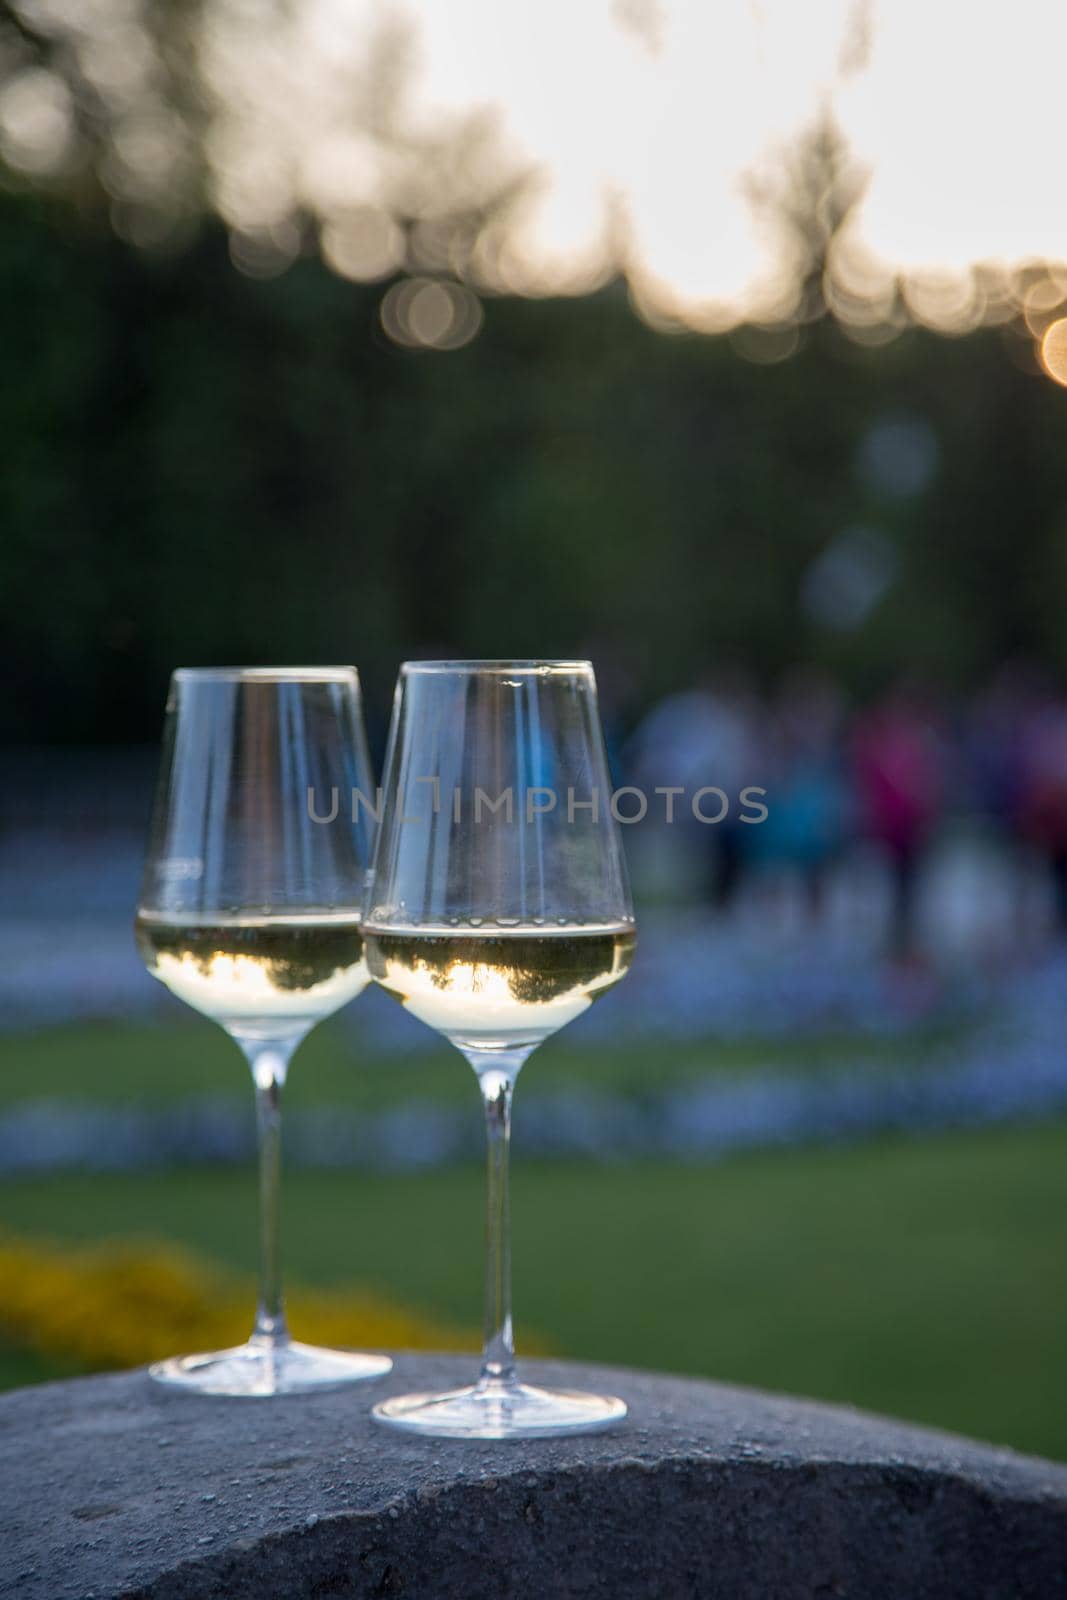 Enjoying a glass of white wine in the own garden. Evening sun, summertime. by Daxenbichler